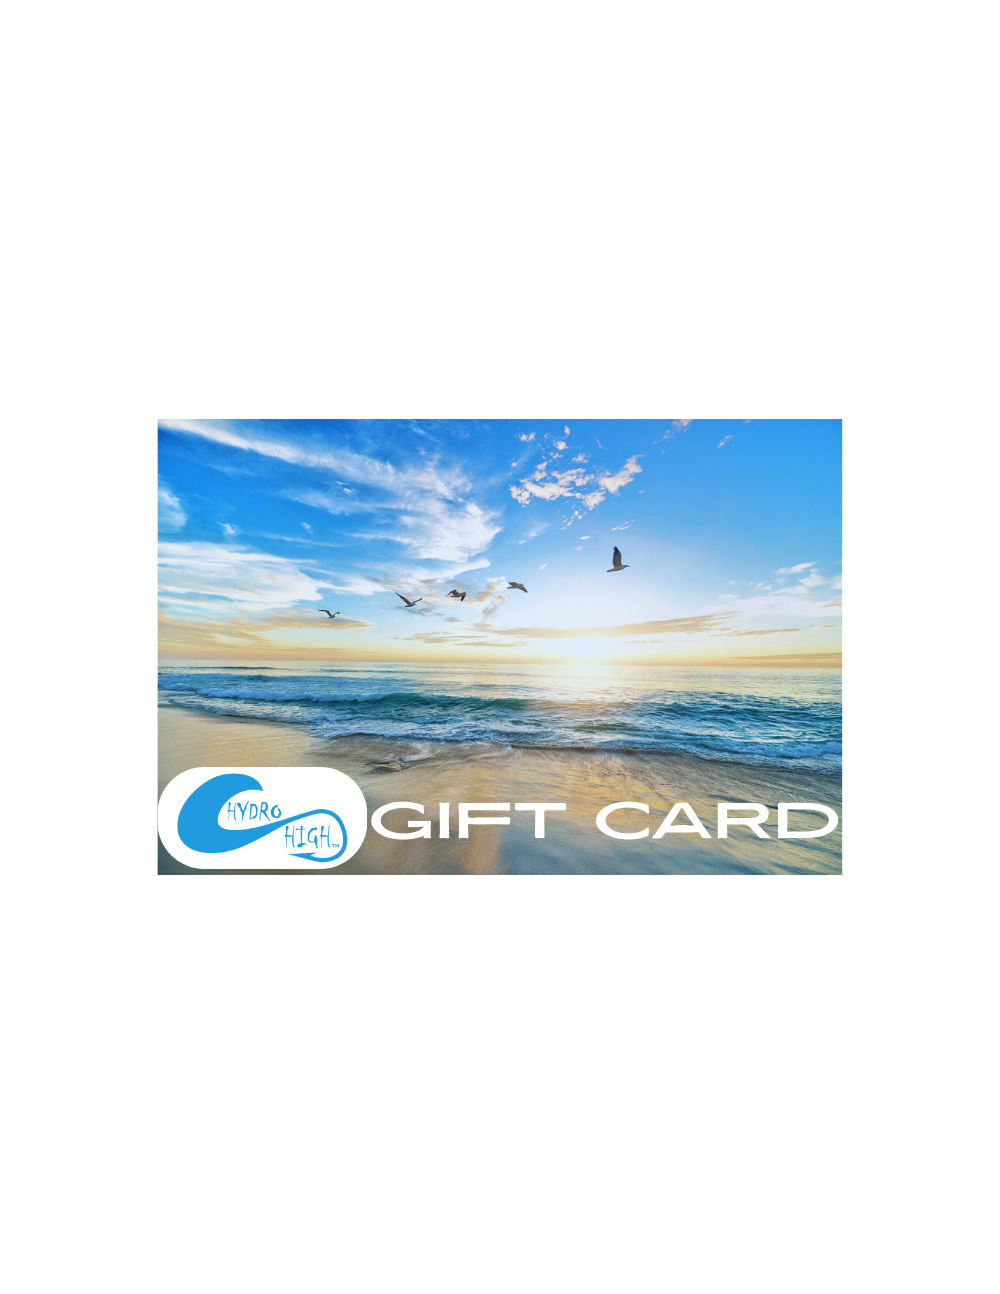 Hydro High Gift Card